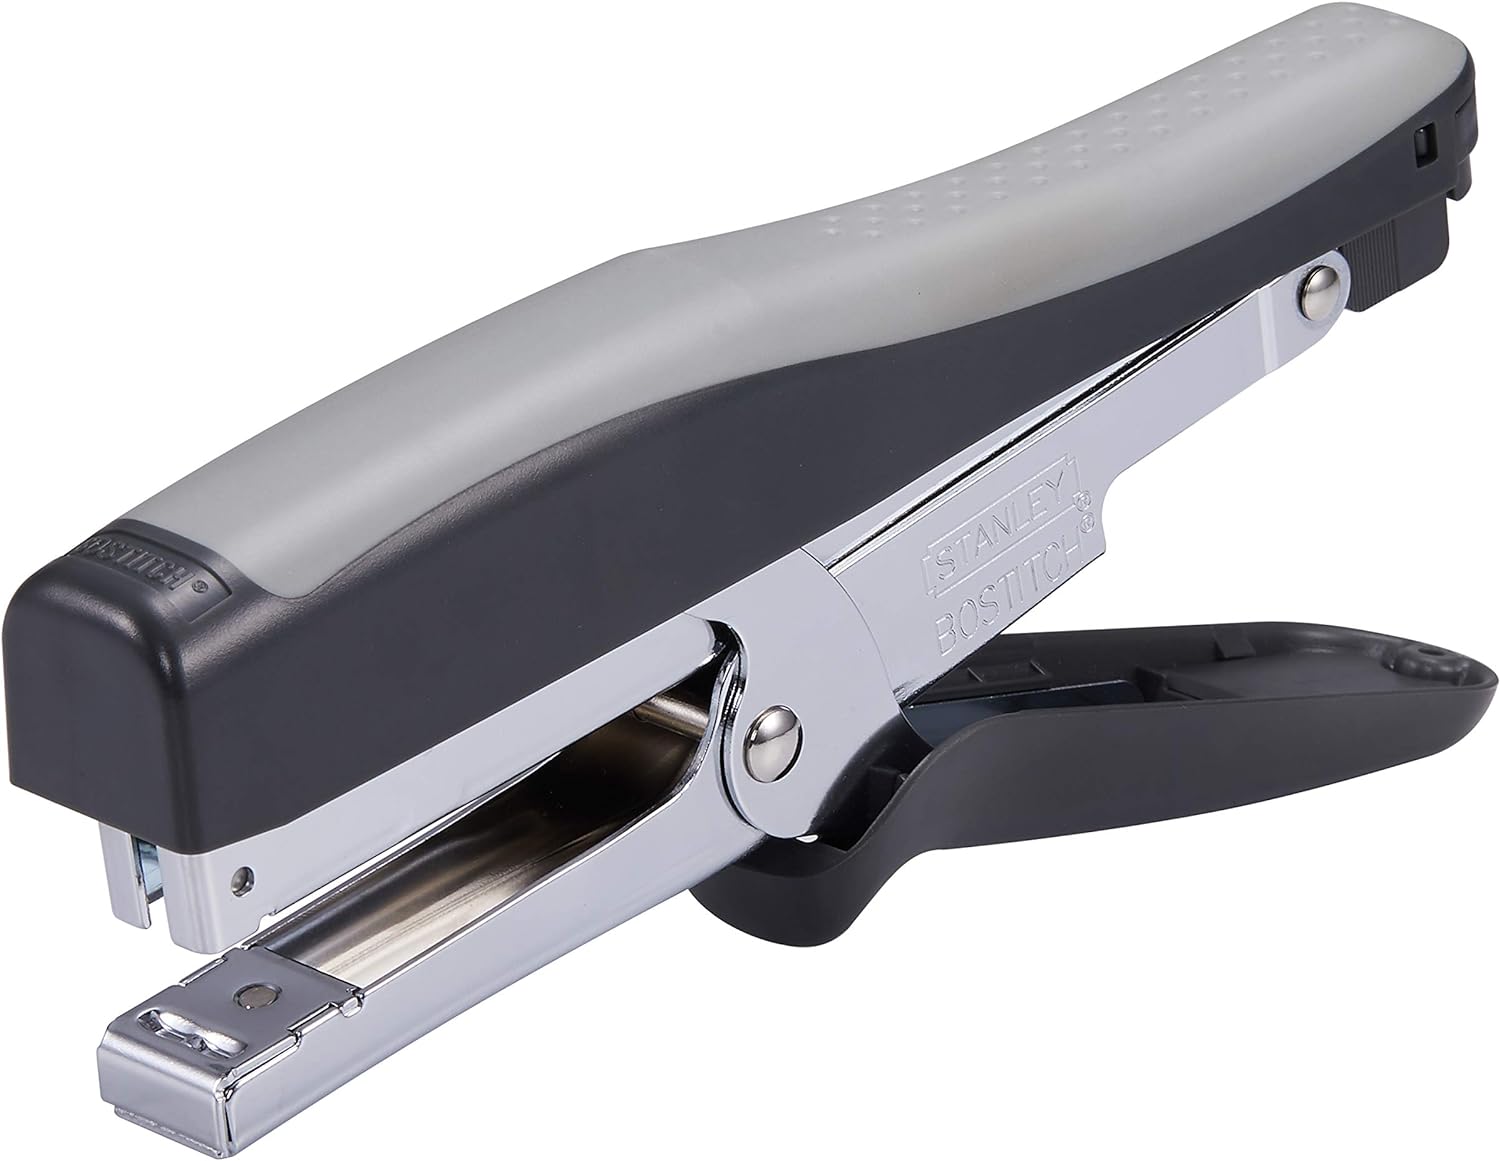 Bostitch No-Jam Desk Stapler (SSP-99) 11.06 x 2.13 x 5 inches